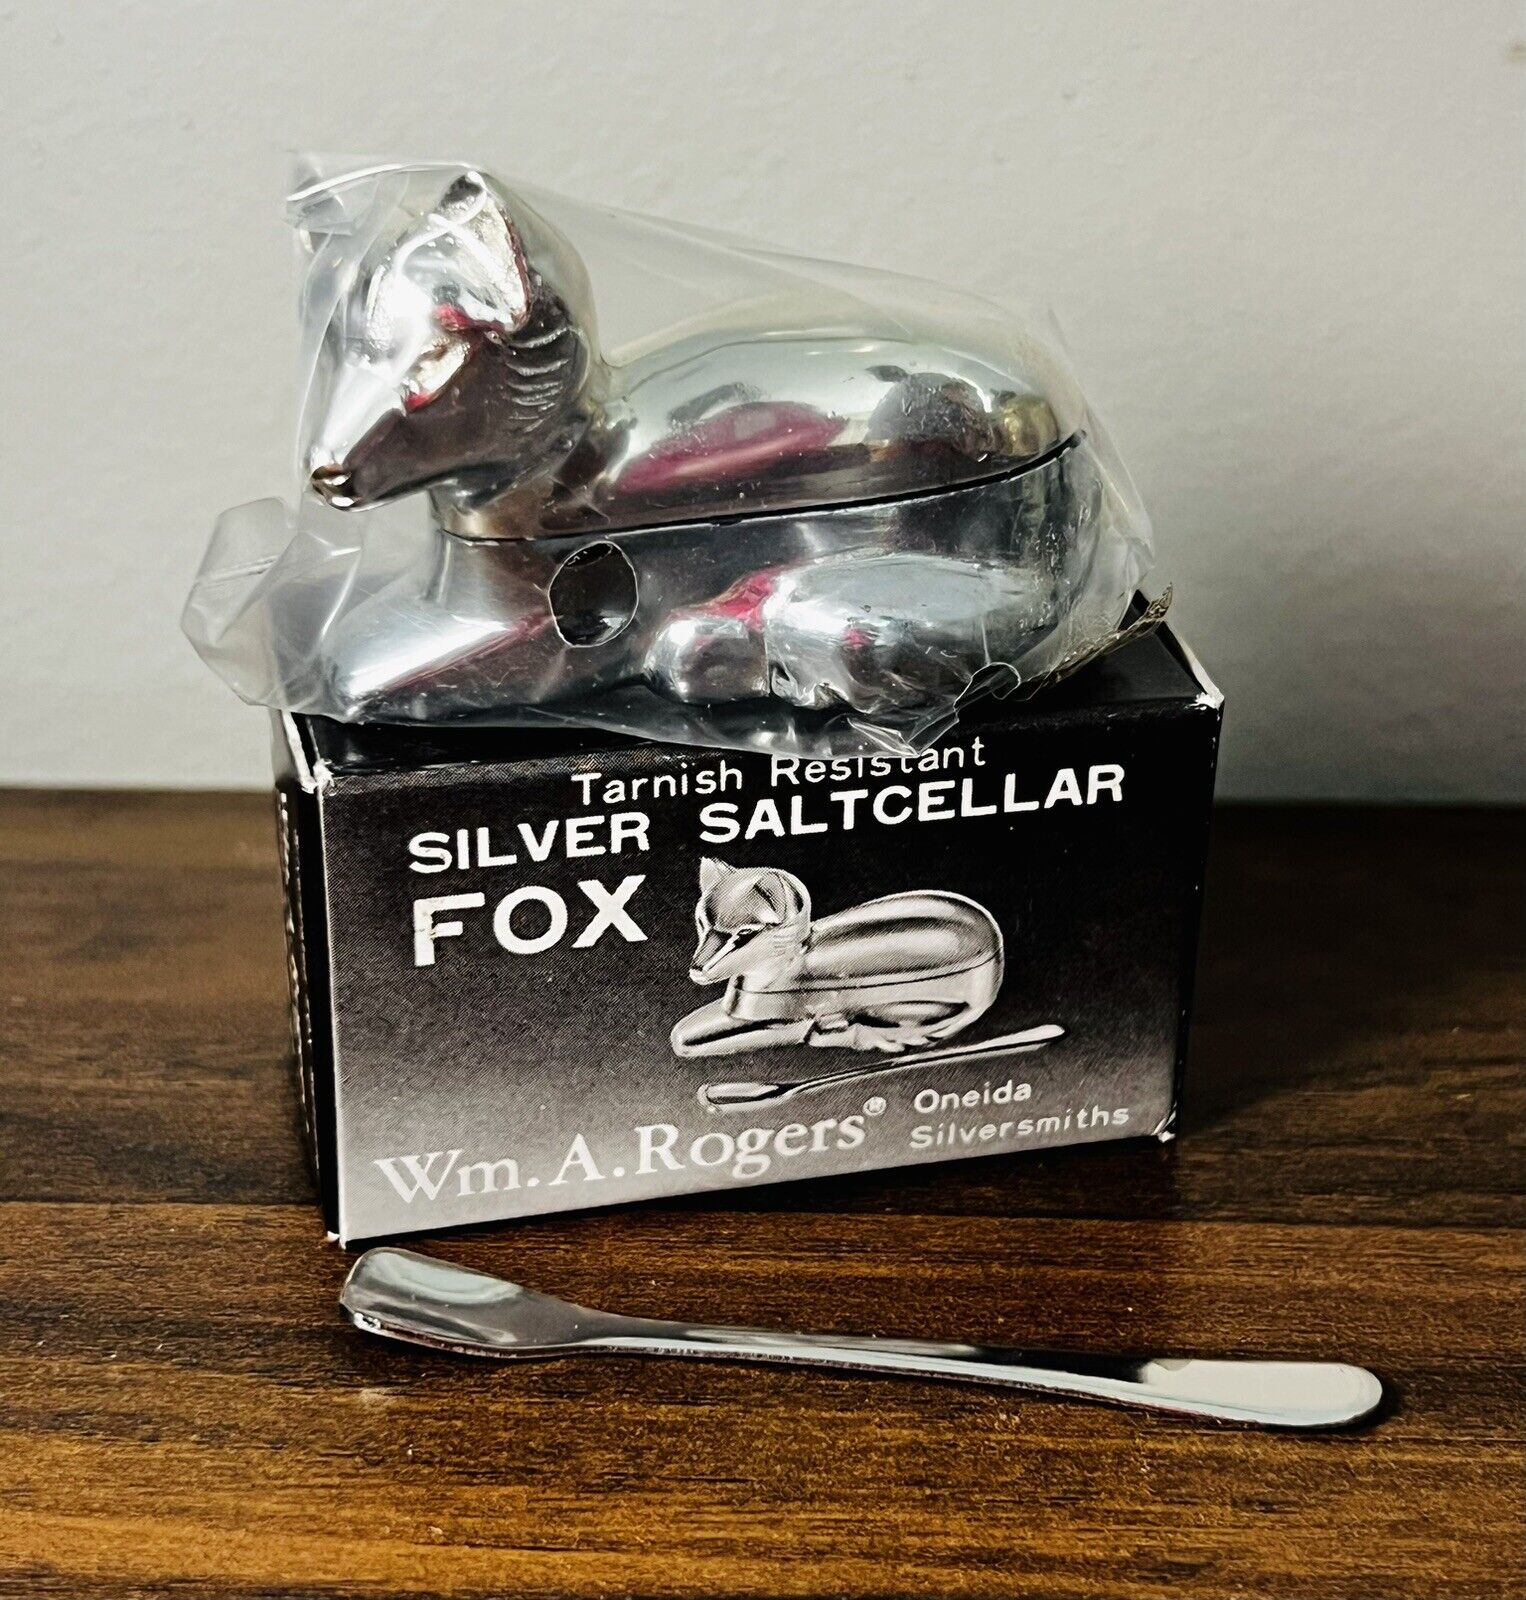 Wm A Rogers Vintage Onieda Silver Plate Fox Salt Cellar With Spoon & Box NEW